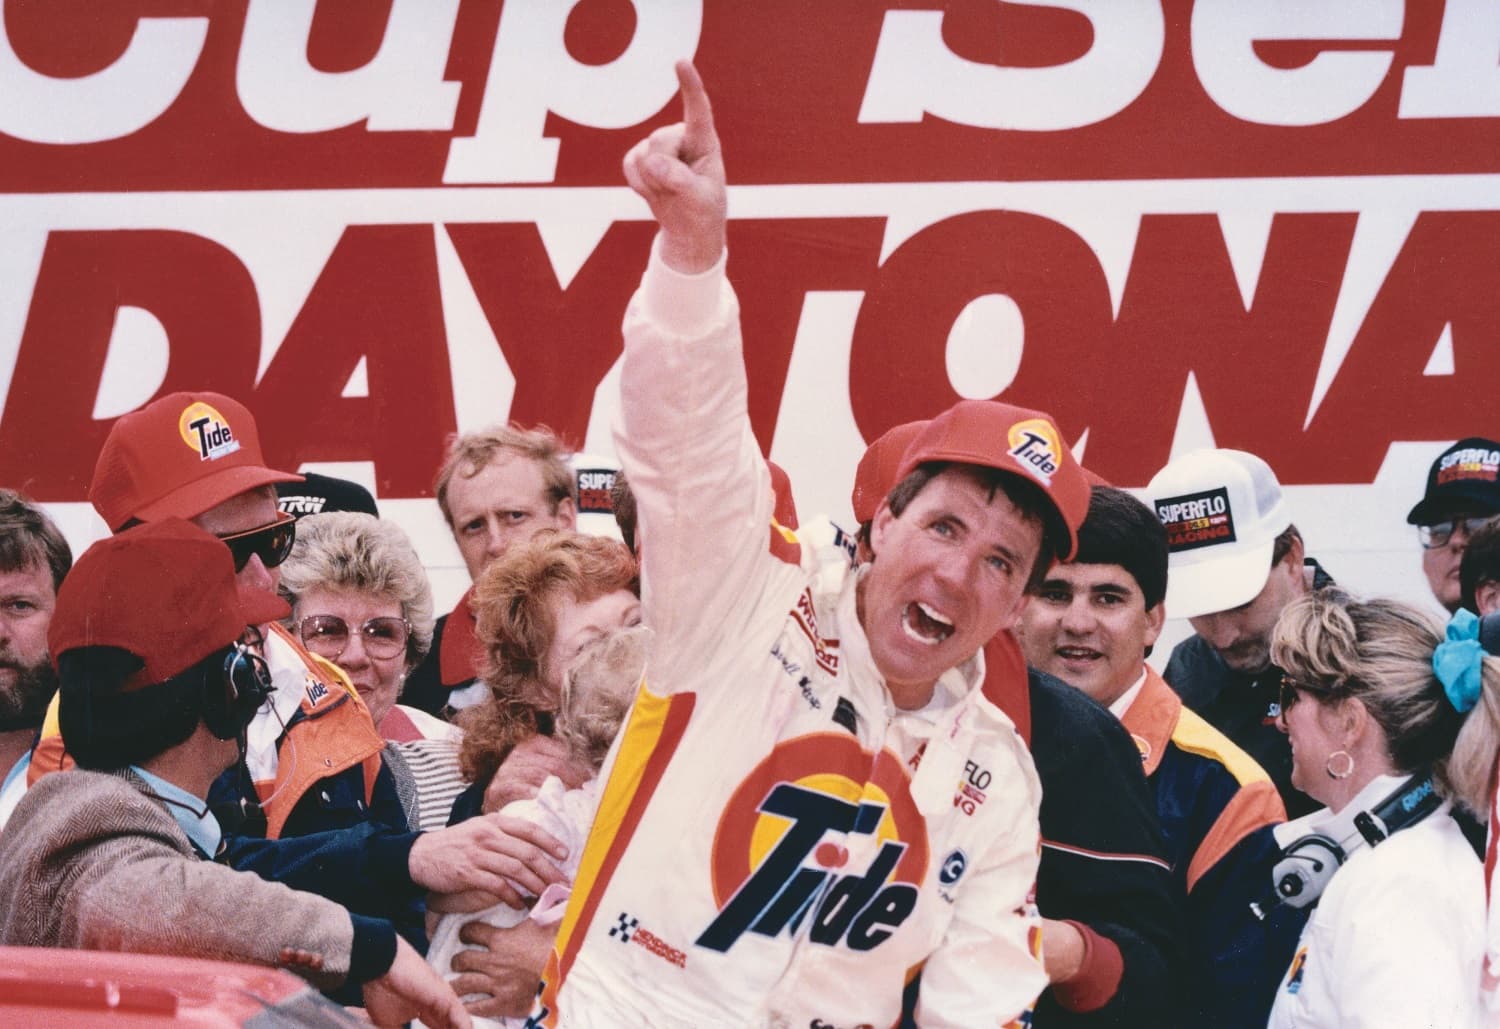 Darrell Waltrip celebrates in Victory Lane after winning the Daytona 500 on Feb. 19, 1989.